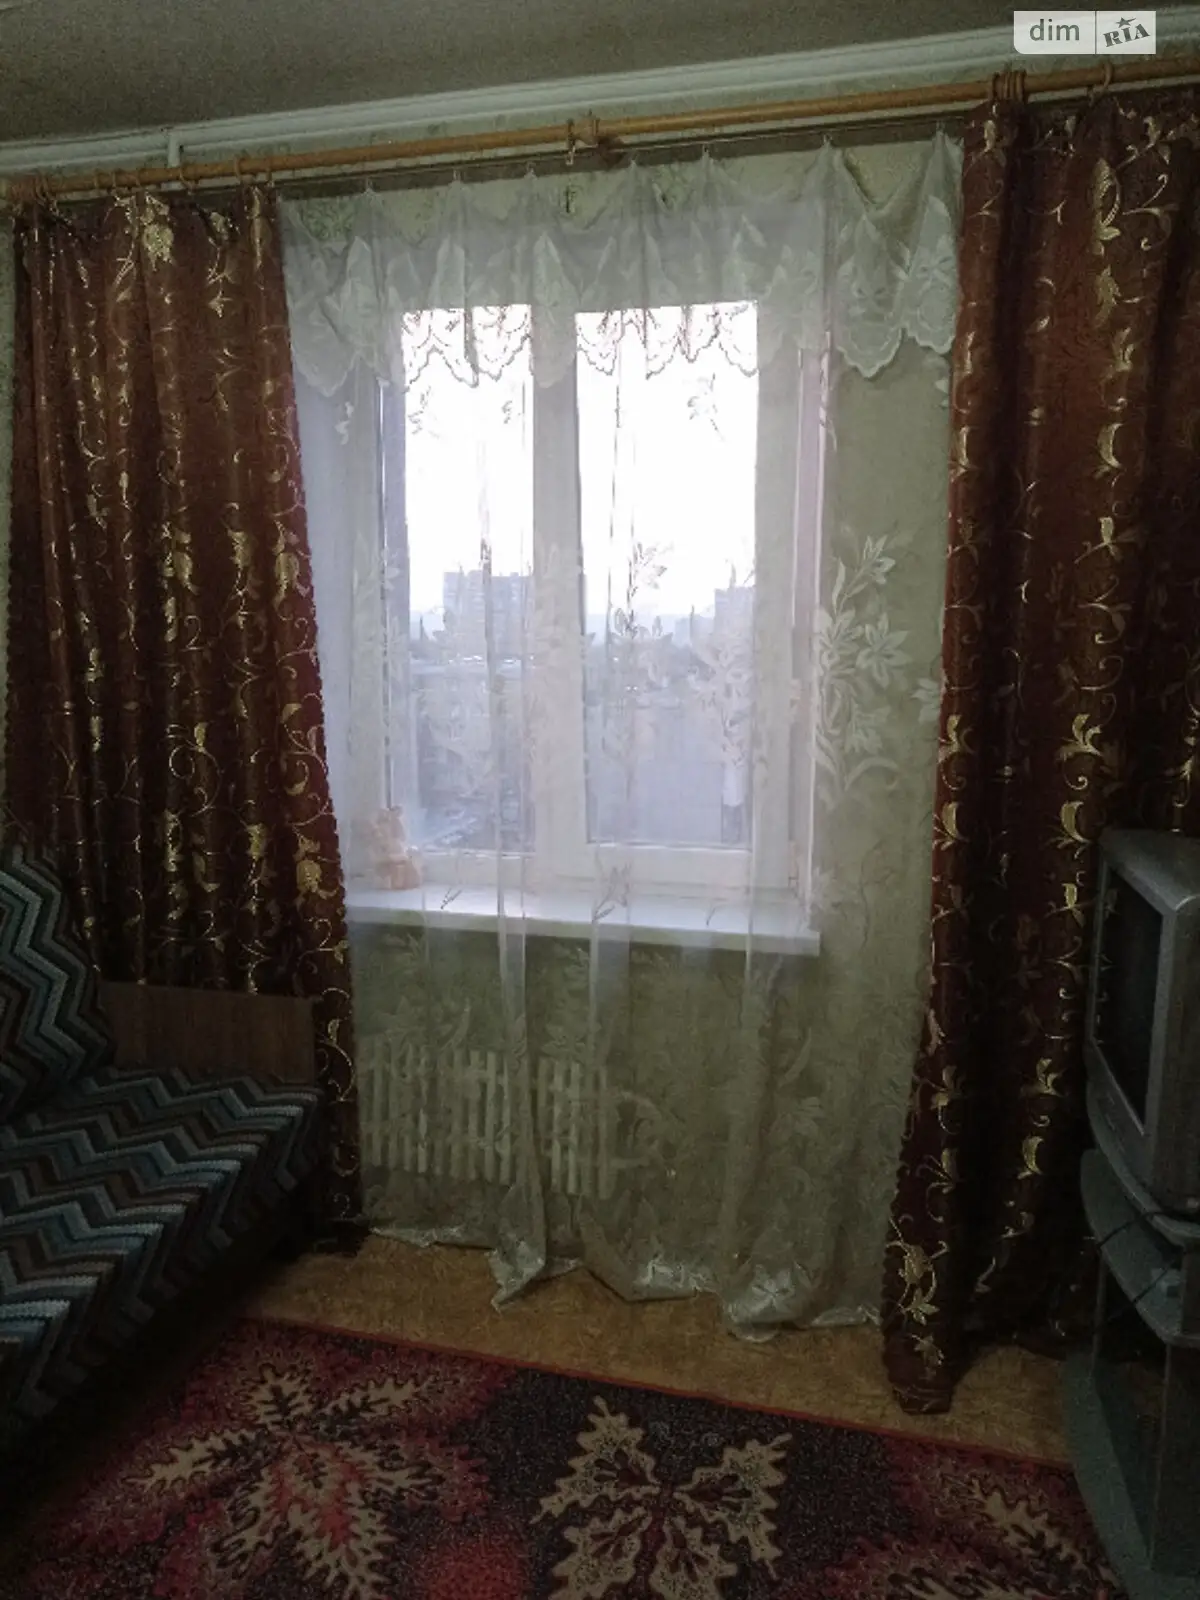 Продается комната 21 кв. м в Харькове - фото 3